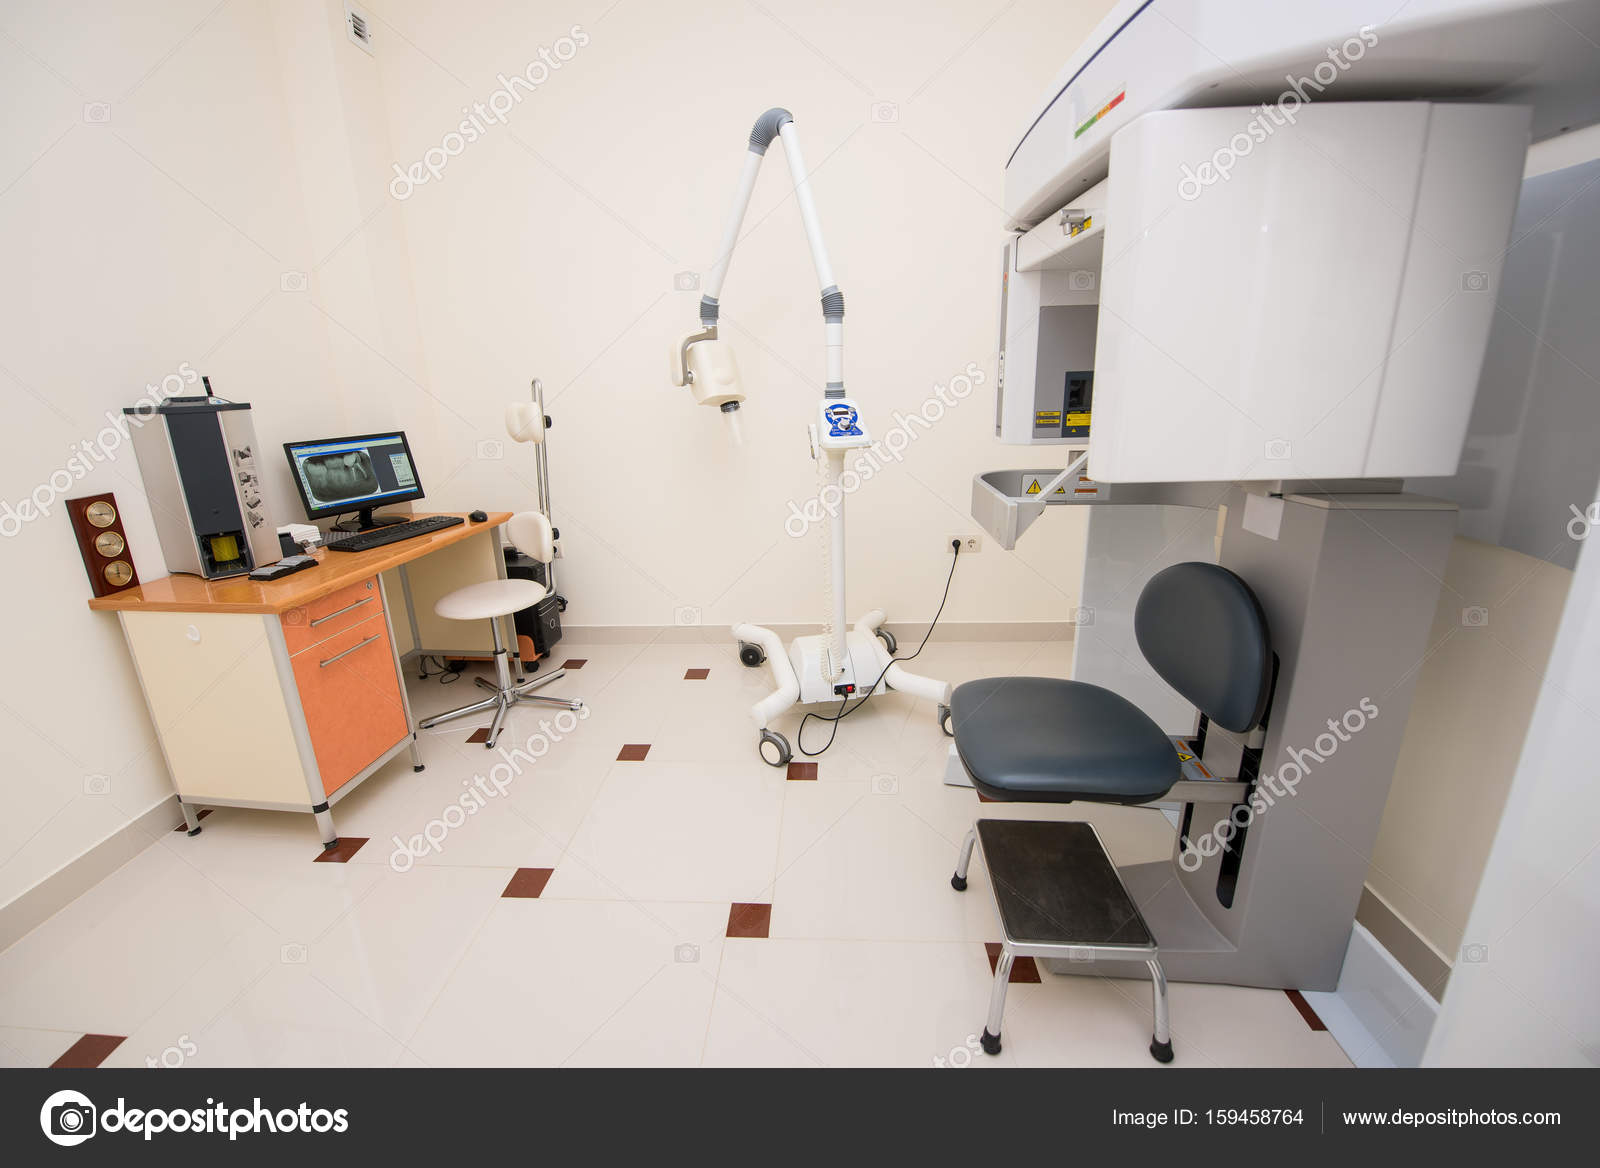 Dental Office With Modern Interior Design Stock Photo